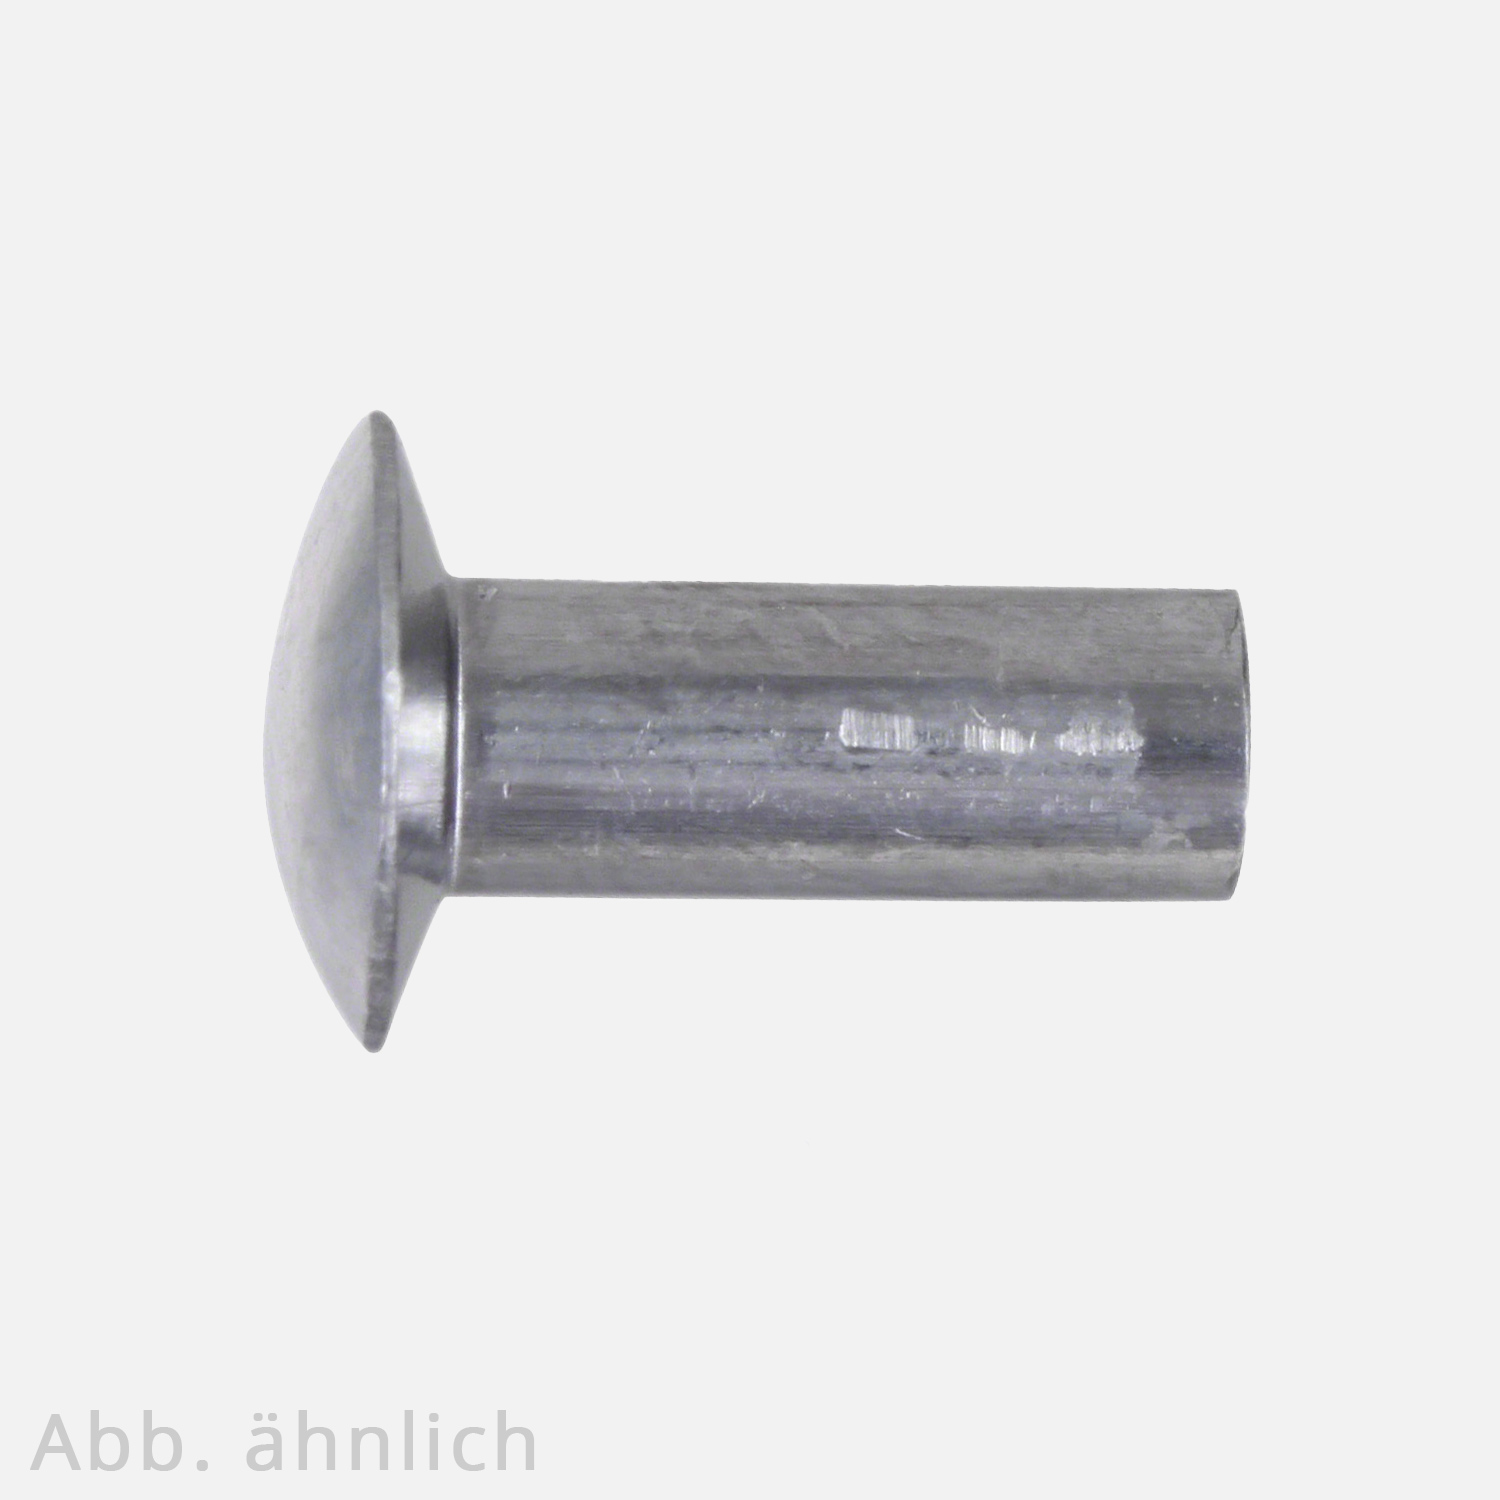 1000 Linsennieten 3x6 mm - DIN 662 - Aluminium 99.5